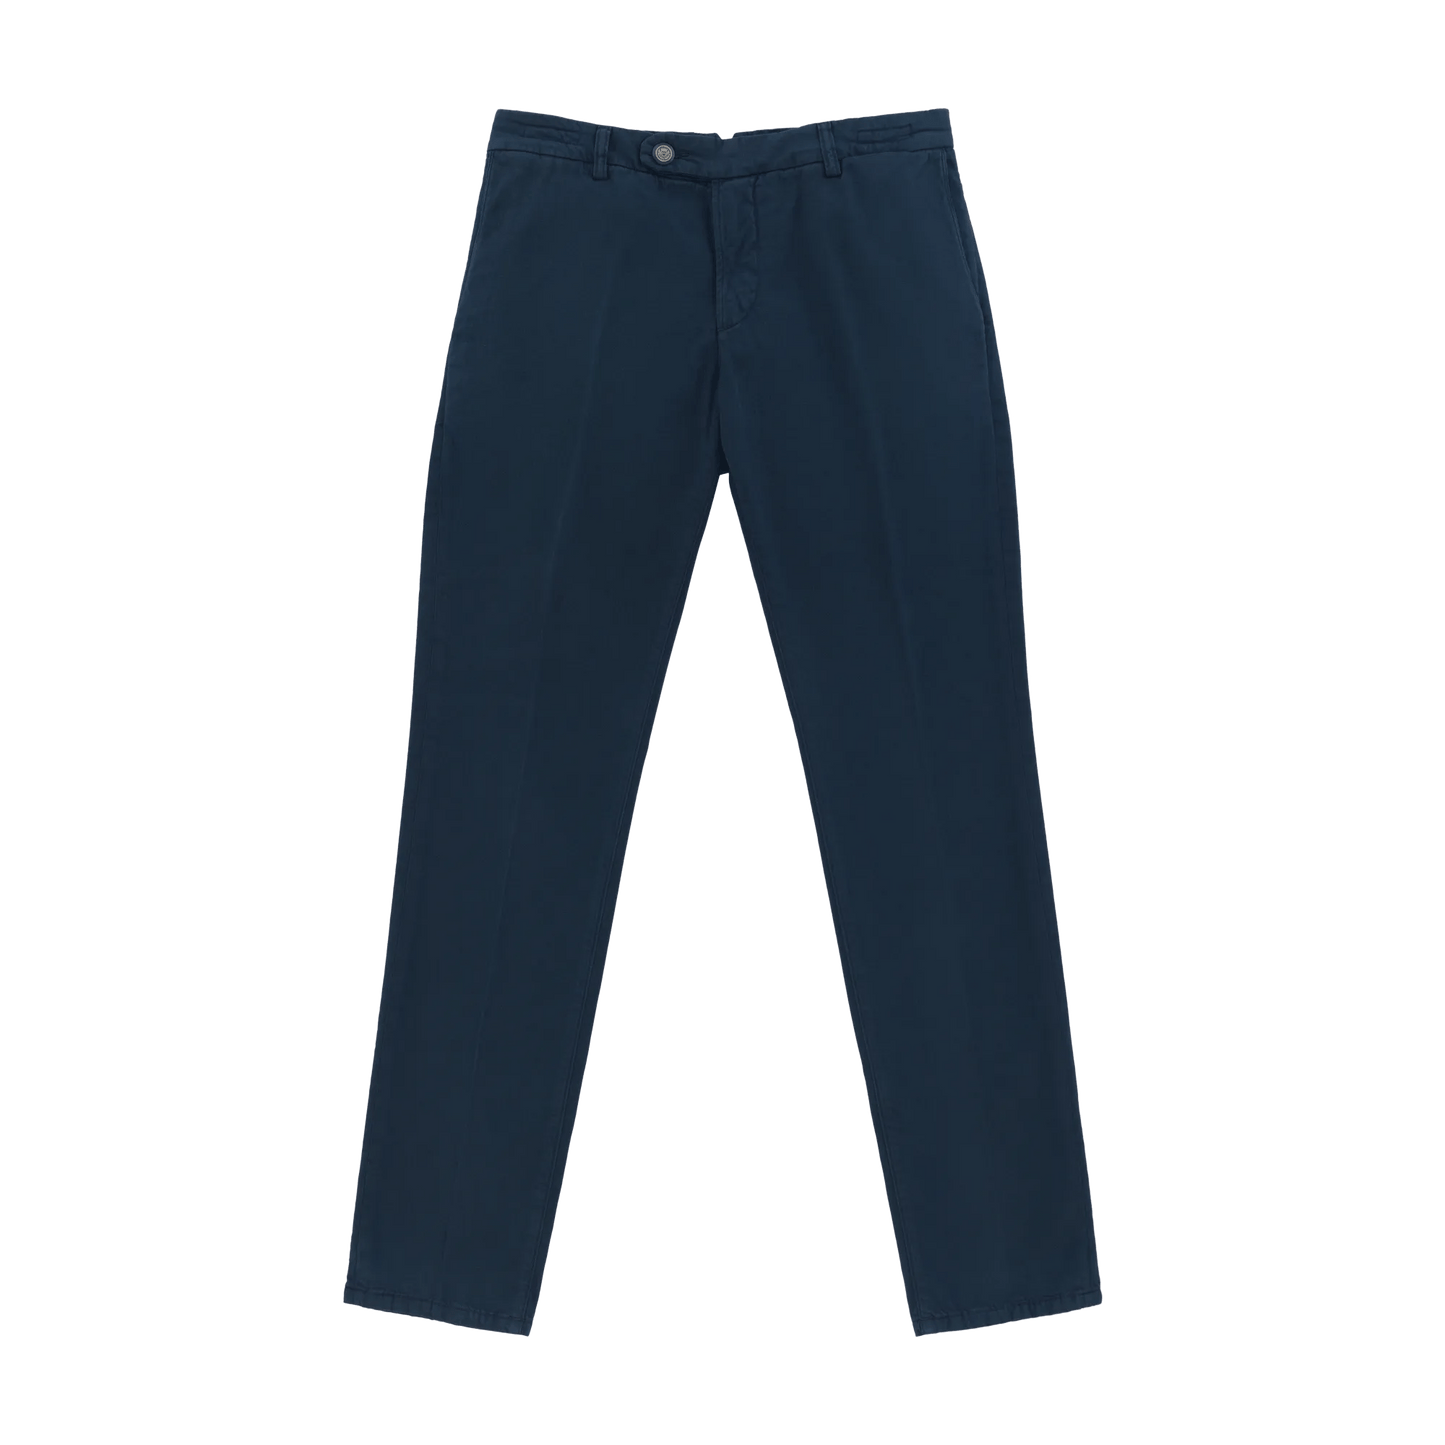 Richard J. Brown Slim - Fit Stretch - Cotton Trousers in Dark Blue - SARTALE